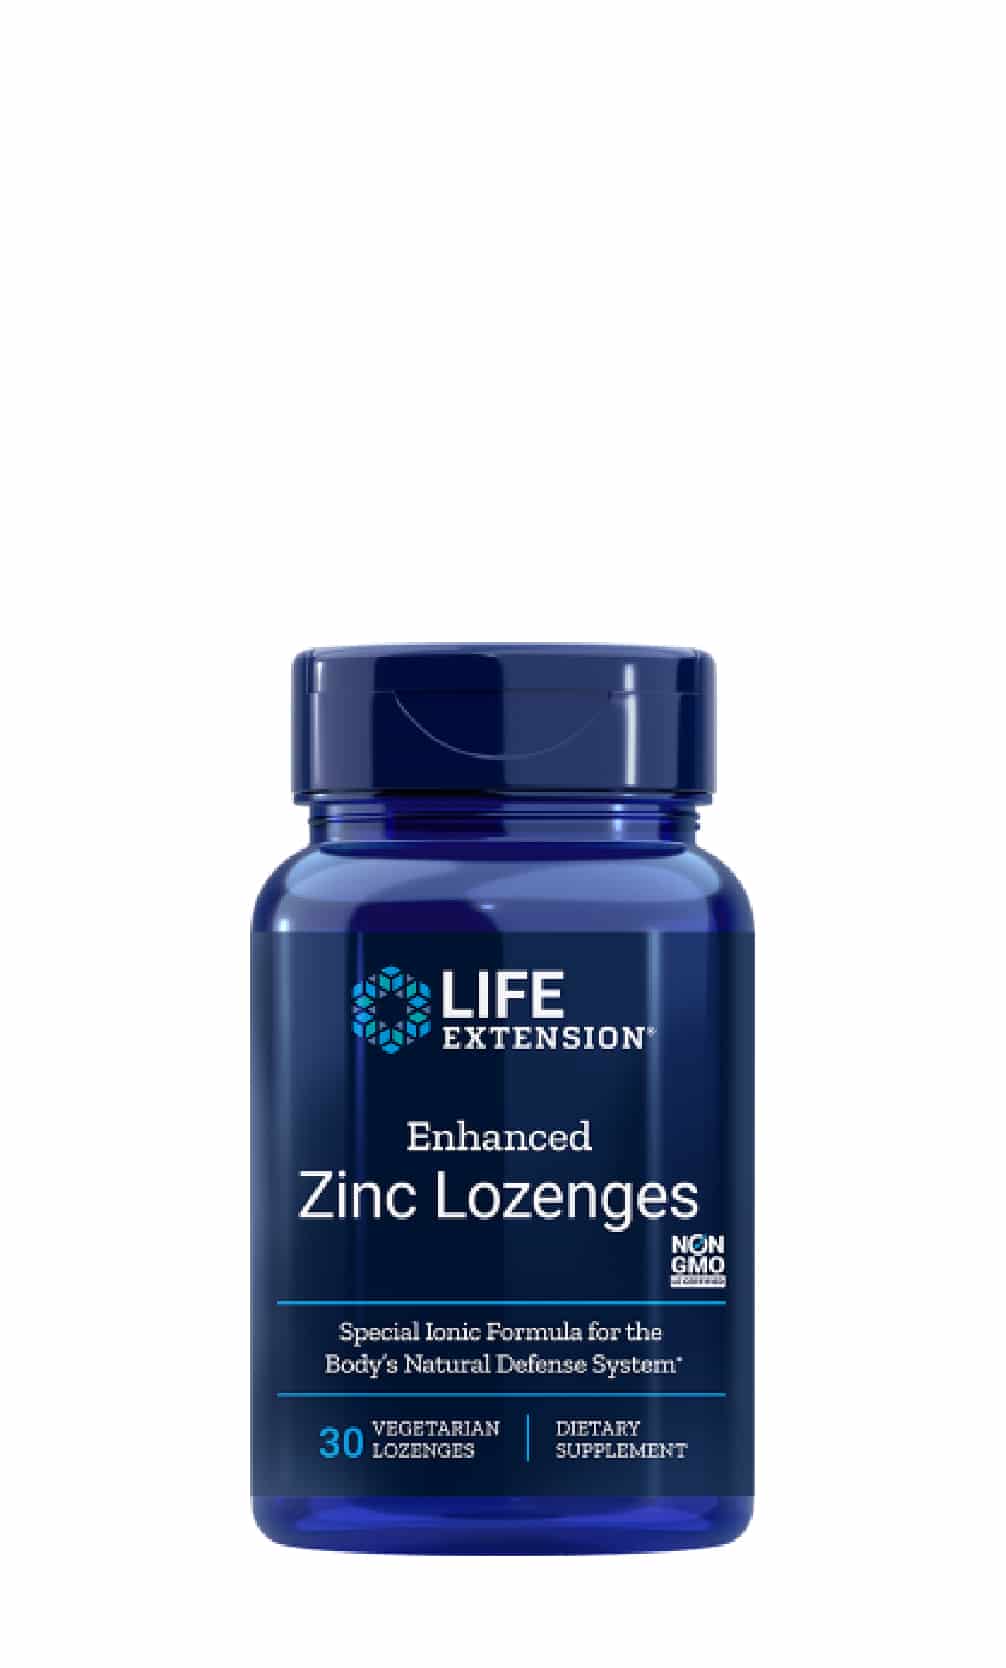 Acheter  Life Extension Zinc Lozenges (enhanced) chez LiveHelfi